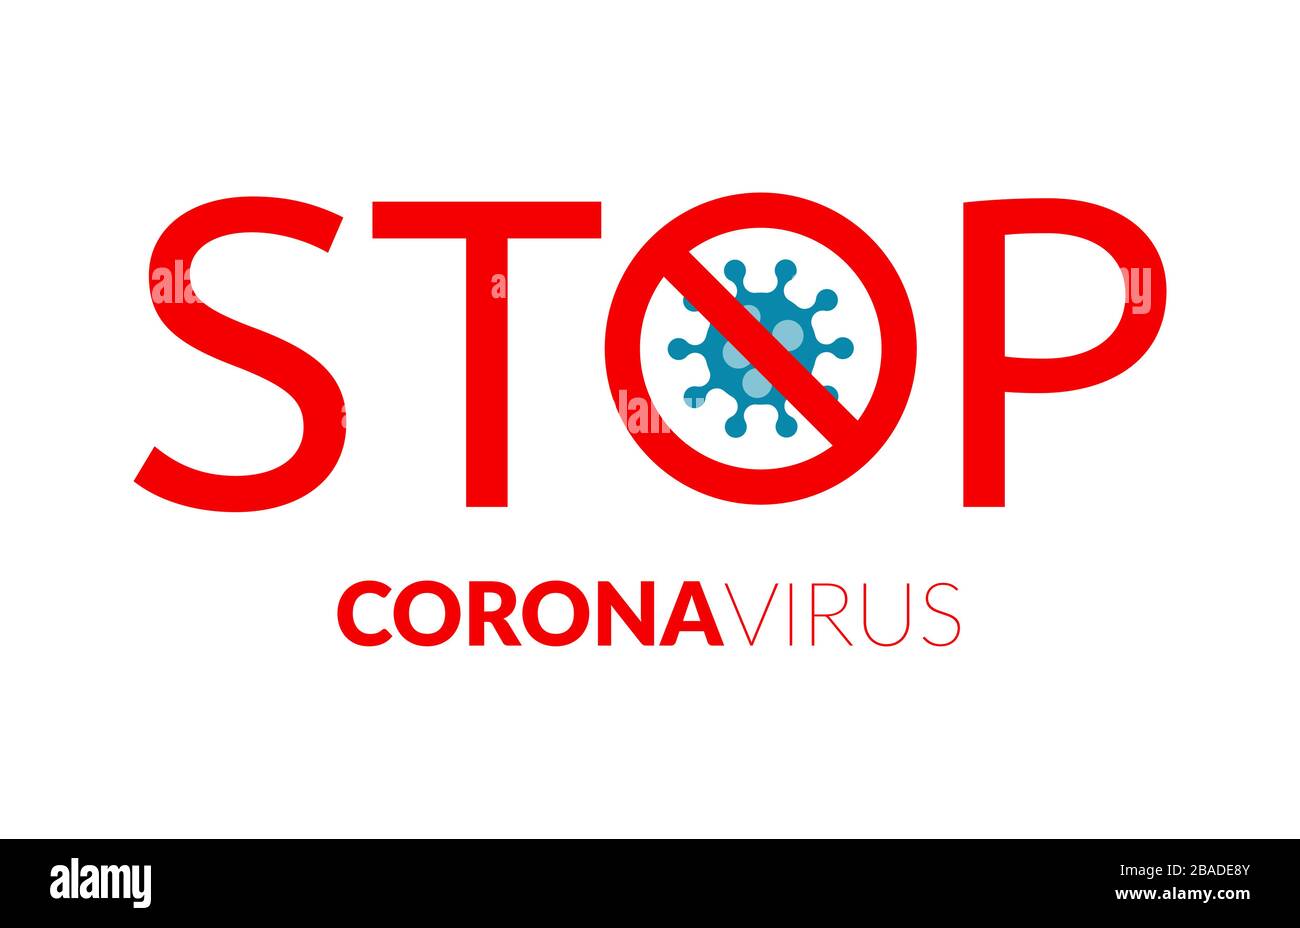 Stoppschild mit Virus im Innern. Corovavirus Pandemia Warnkonzept. Vector Covid 19 Stopp-Poster. Corona-Virus. Stock Vektor